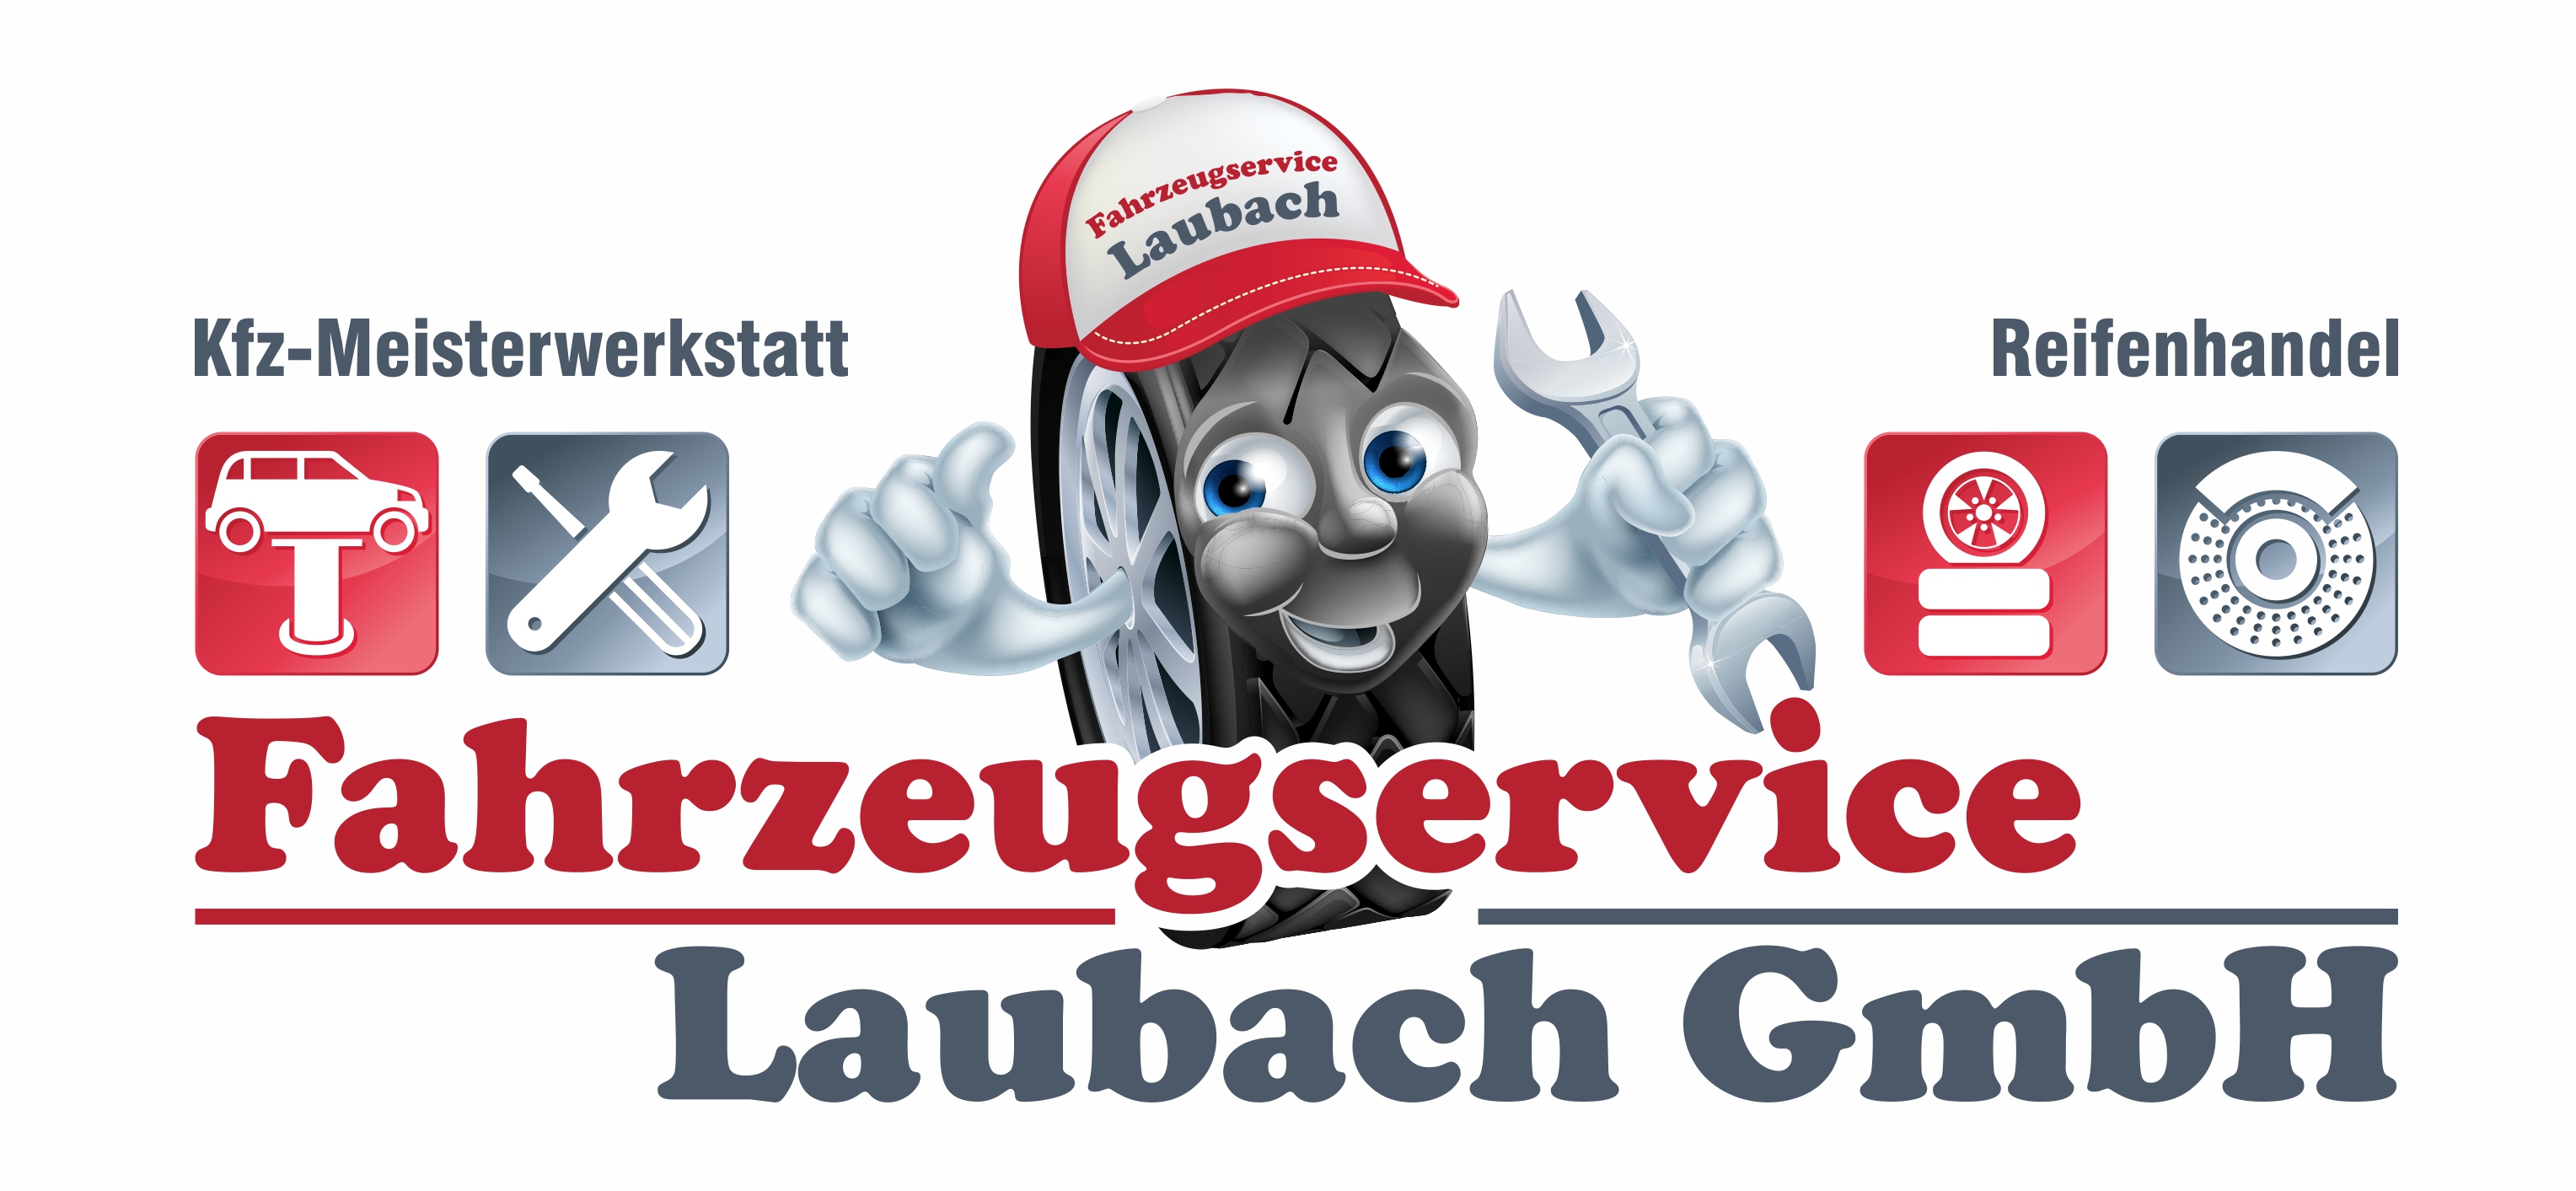 Fahrzeugservice Laubach GmbH logo